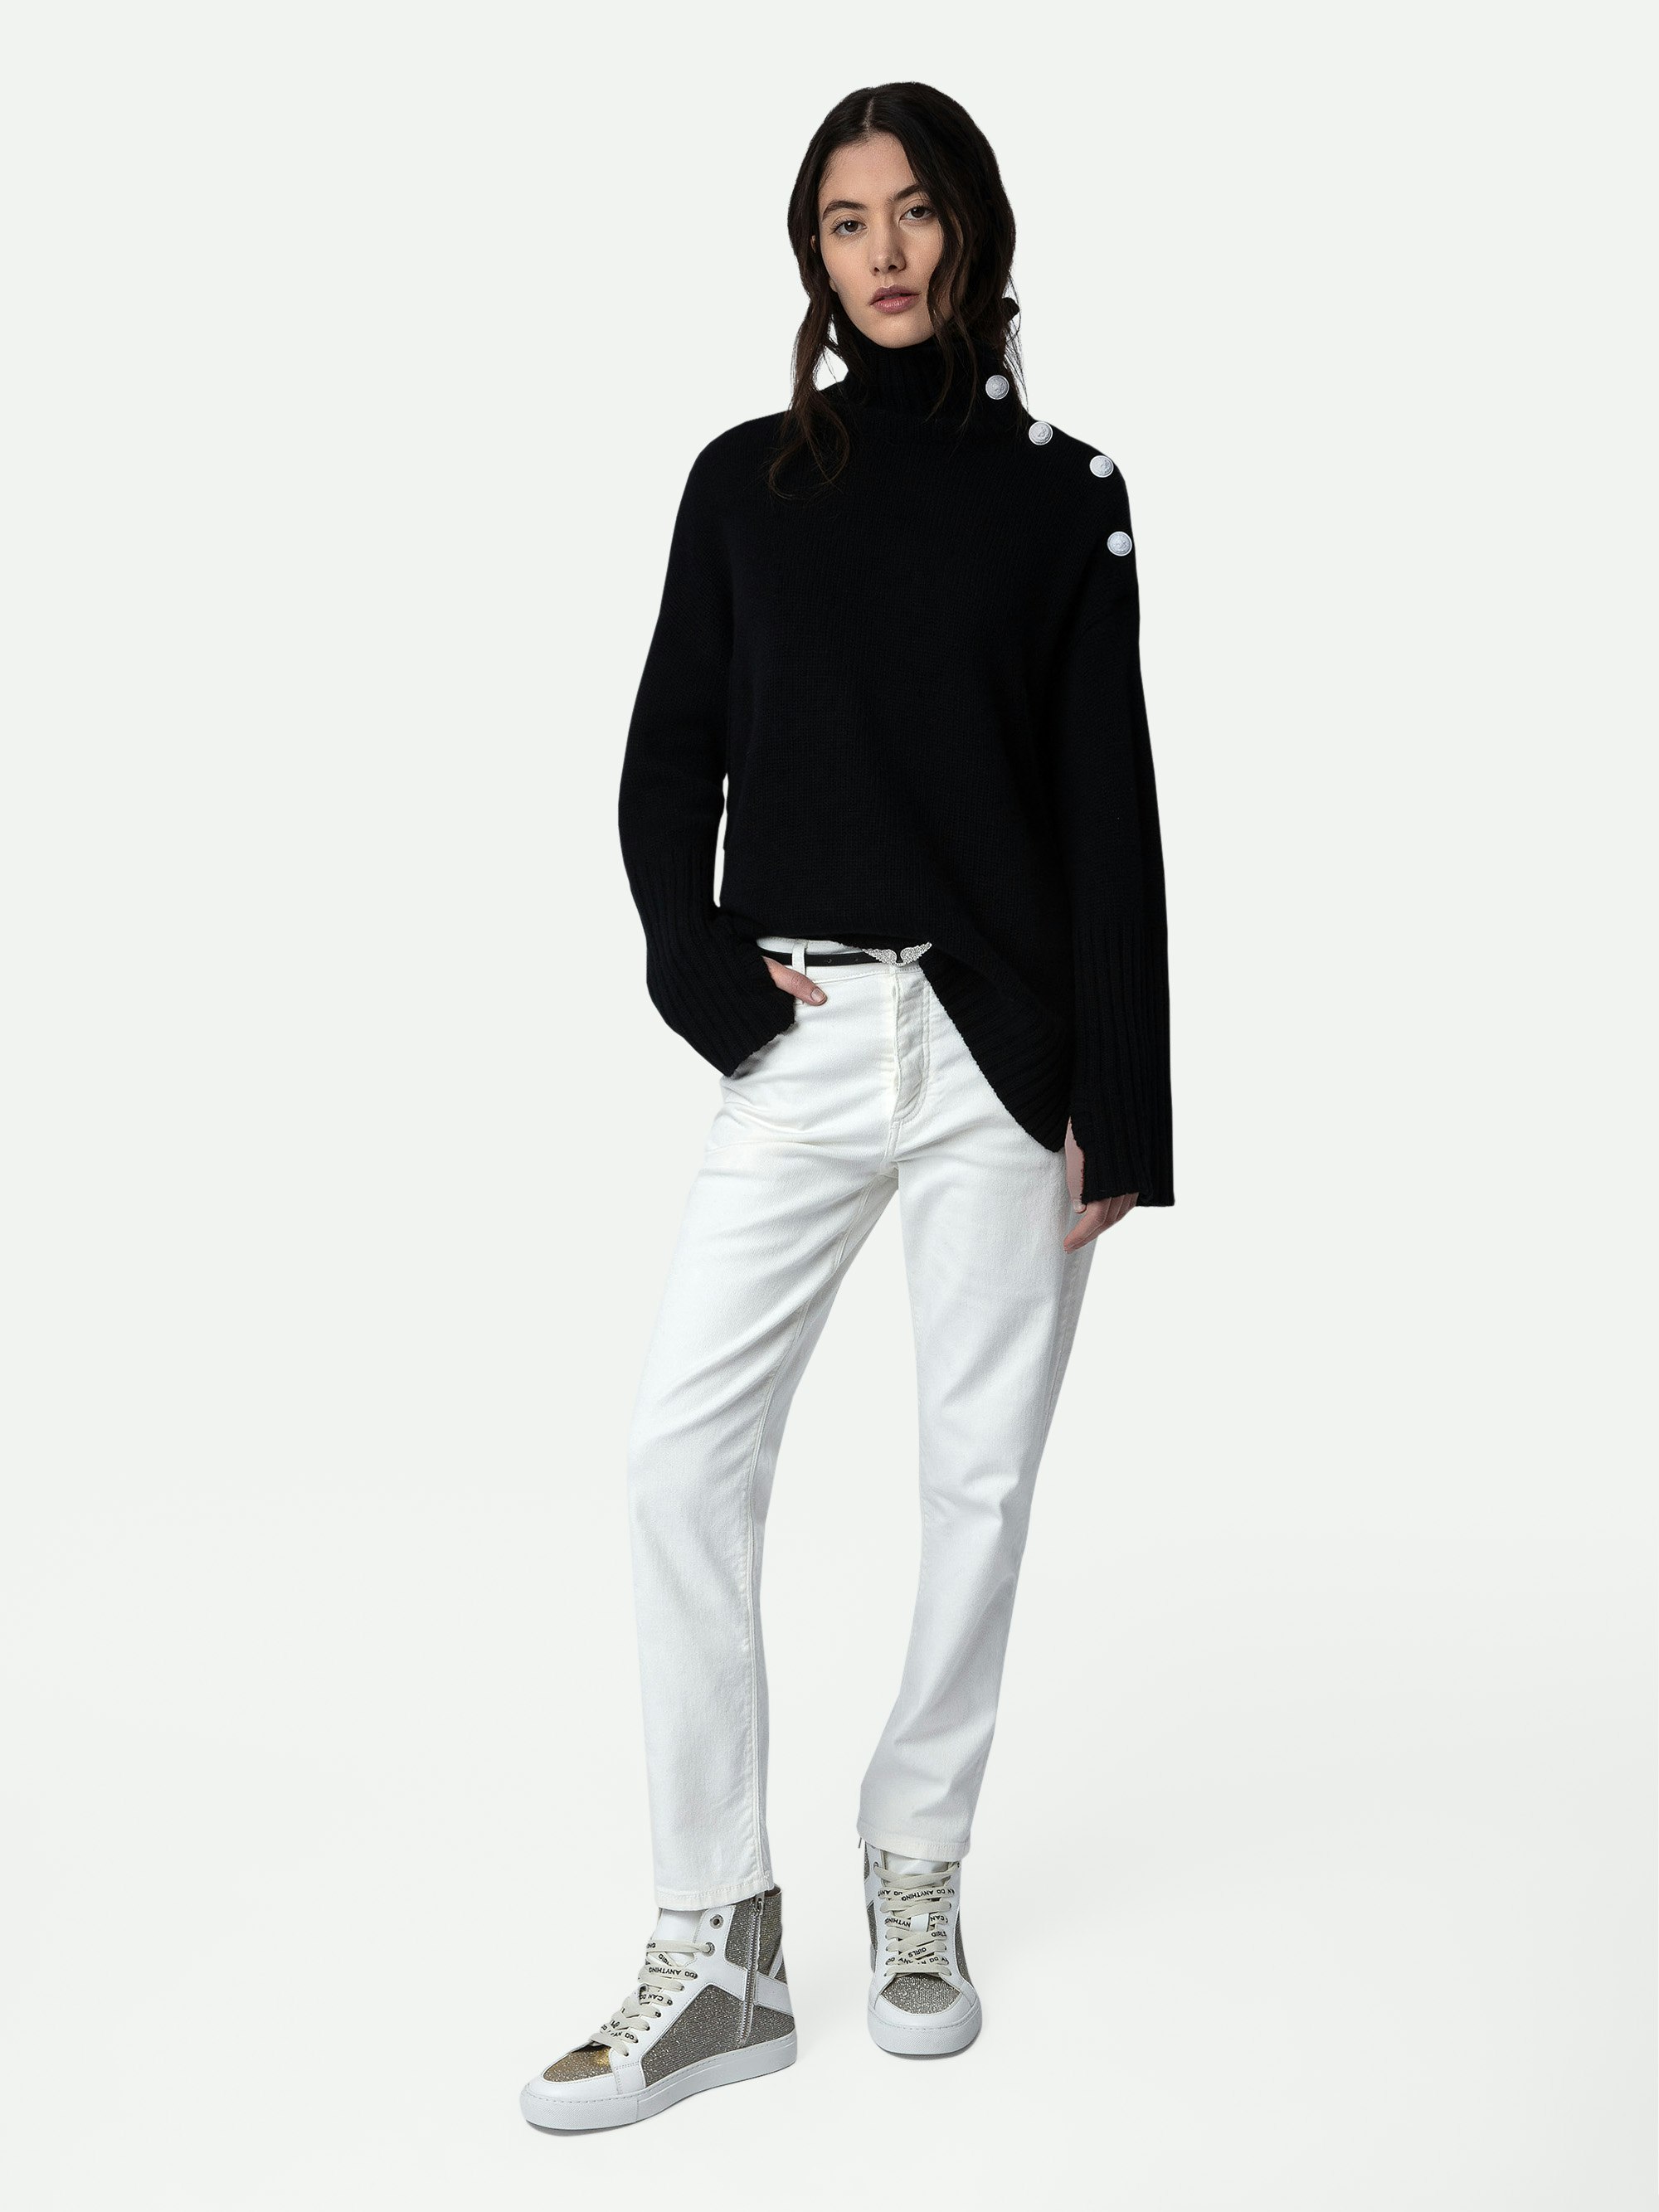 Alma Jumper 100% Cashmere - Women’s black 100% cashmere turtleneck jumper with button detailing